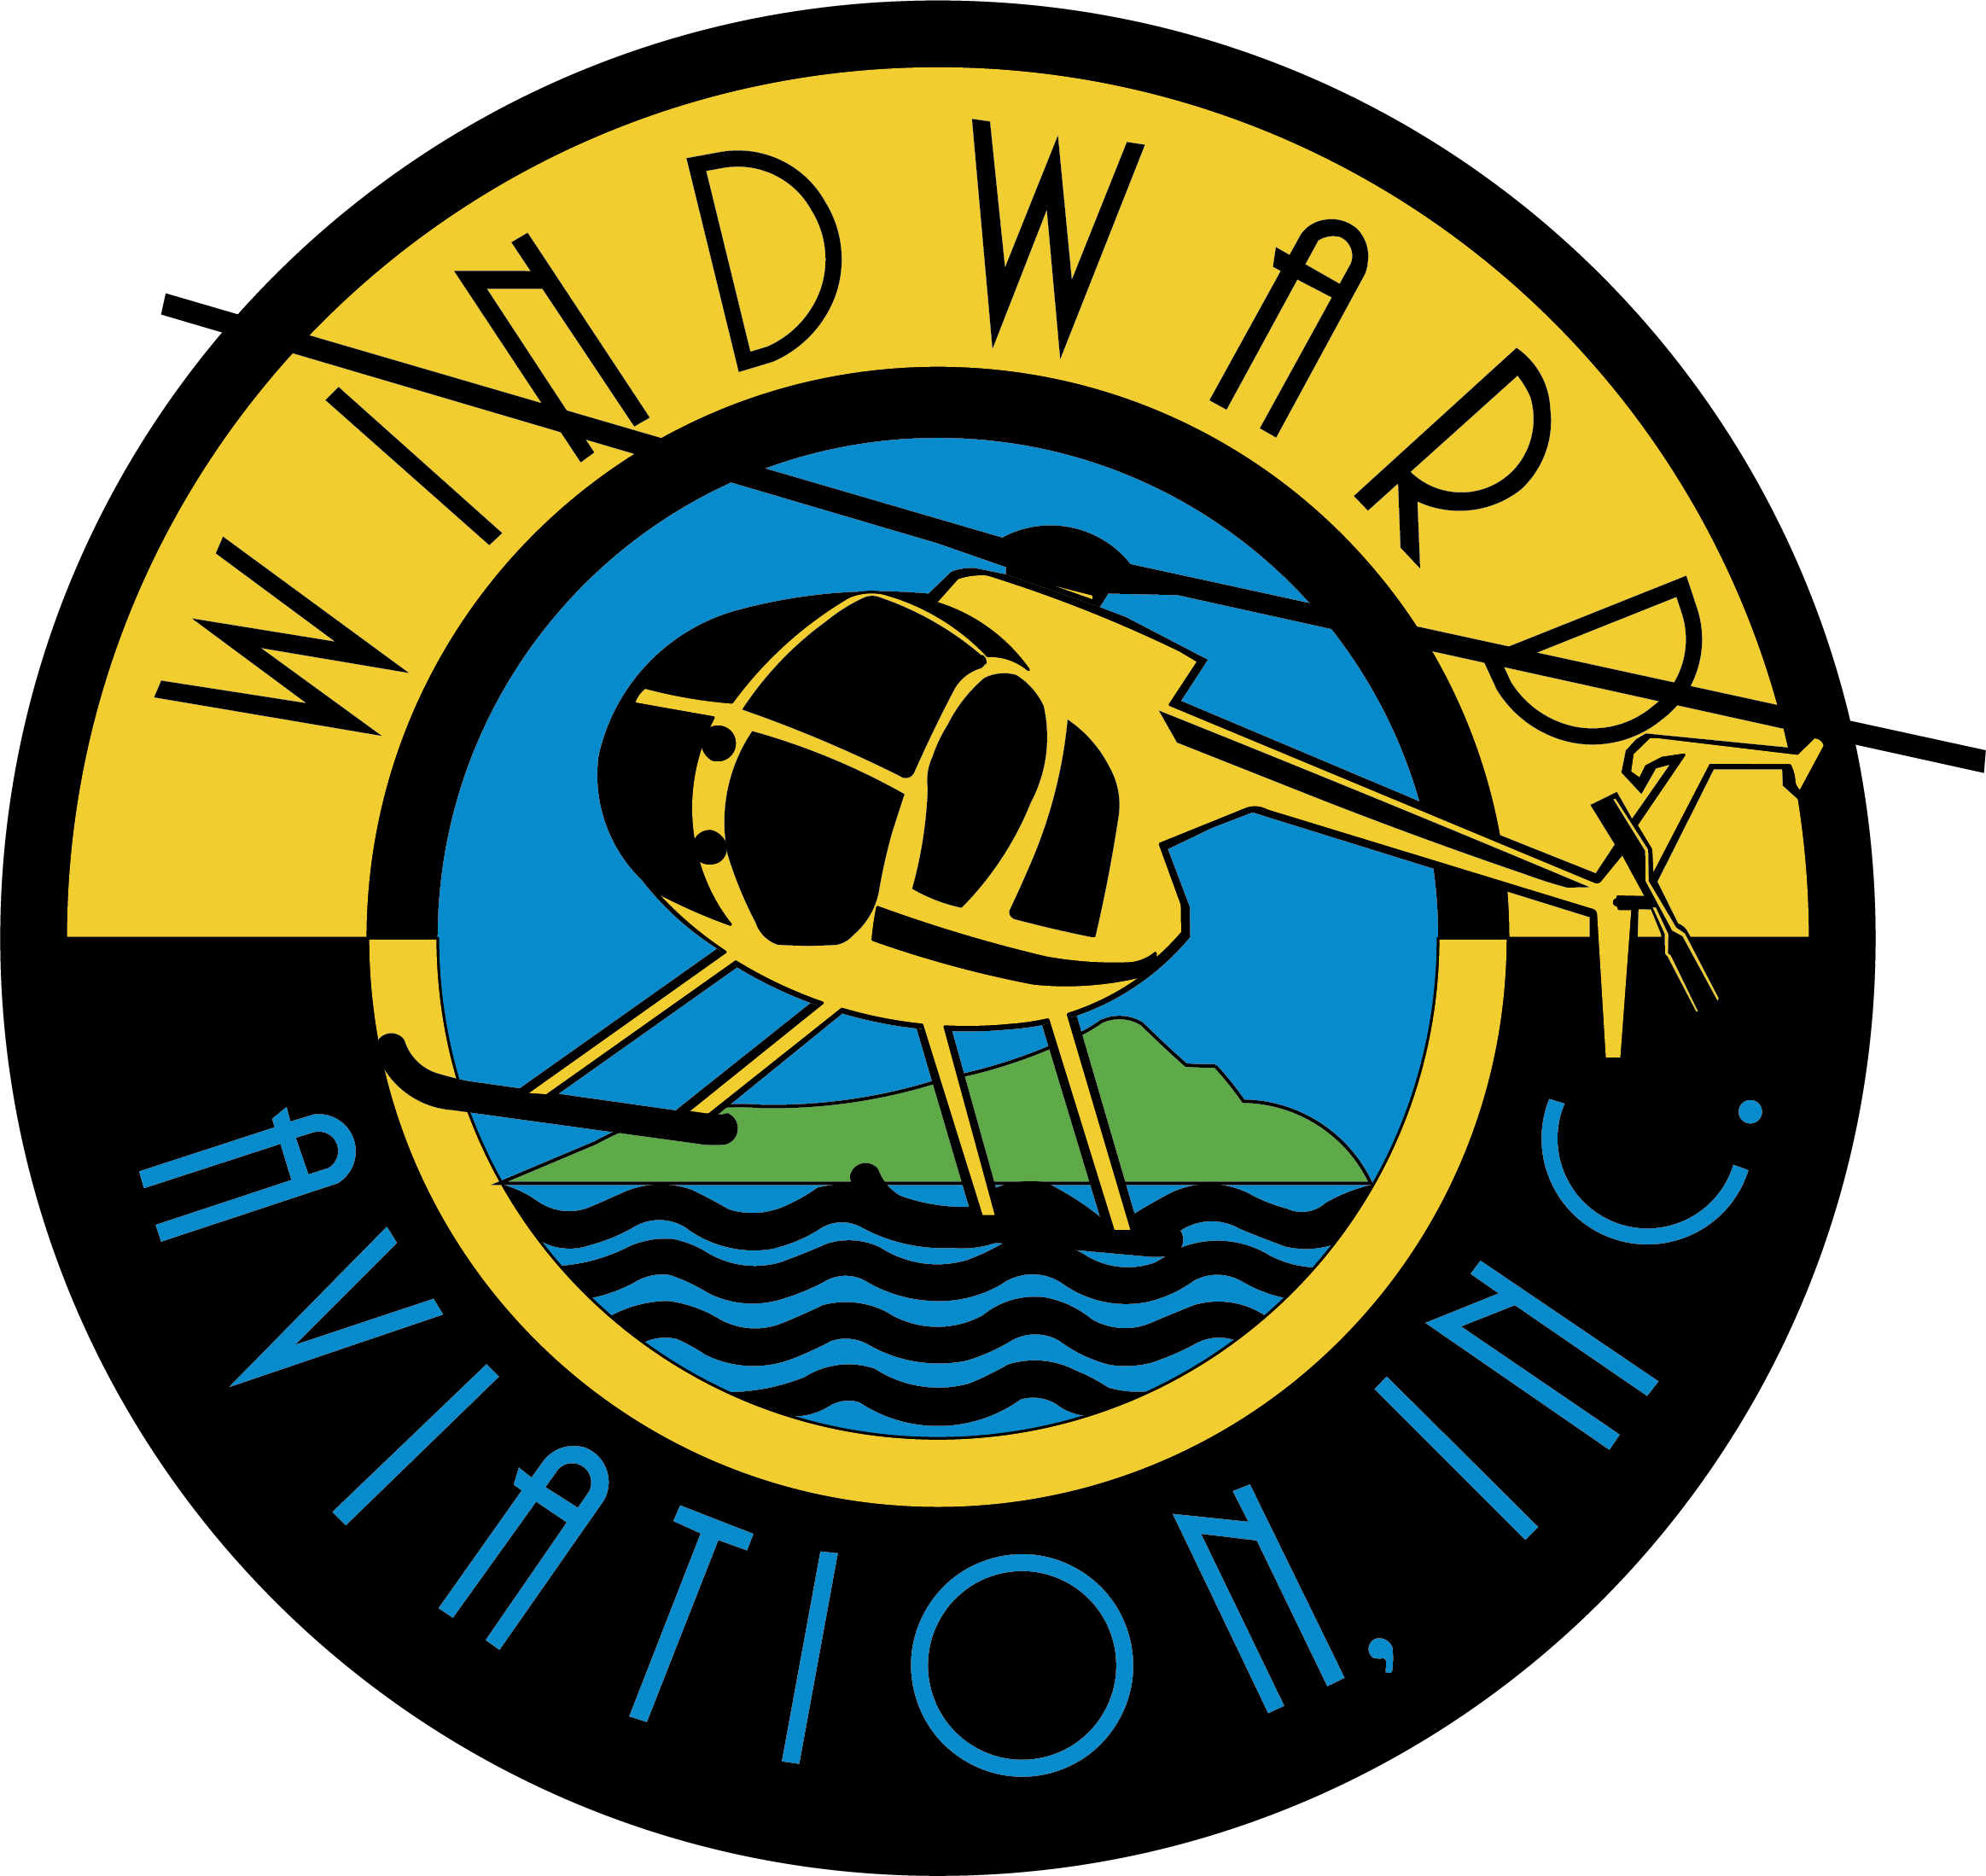 Windward Aviation